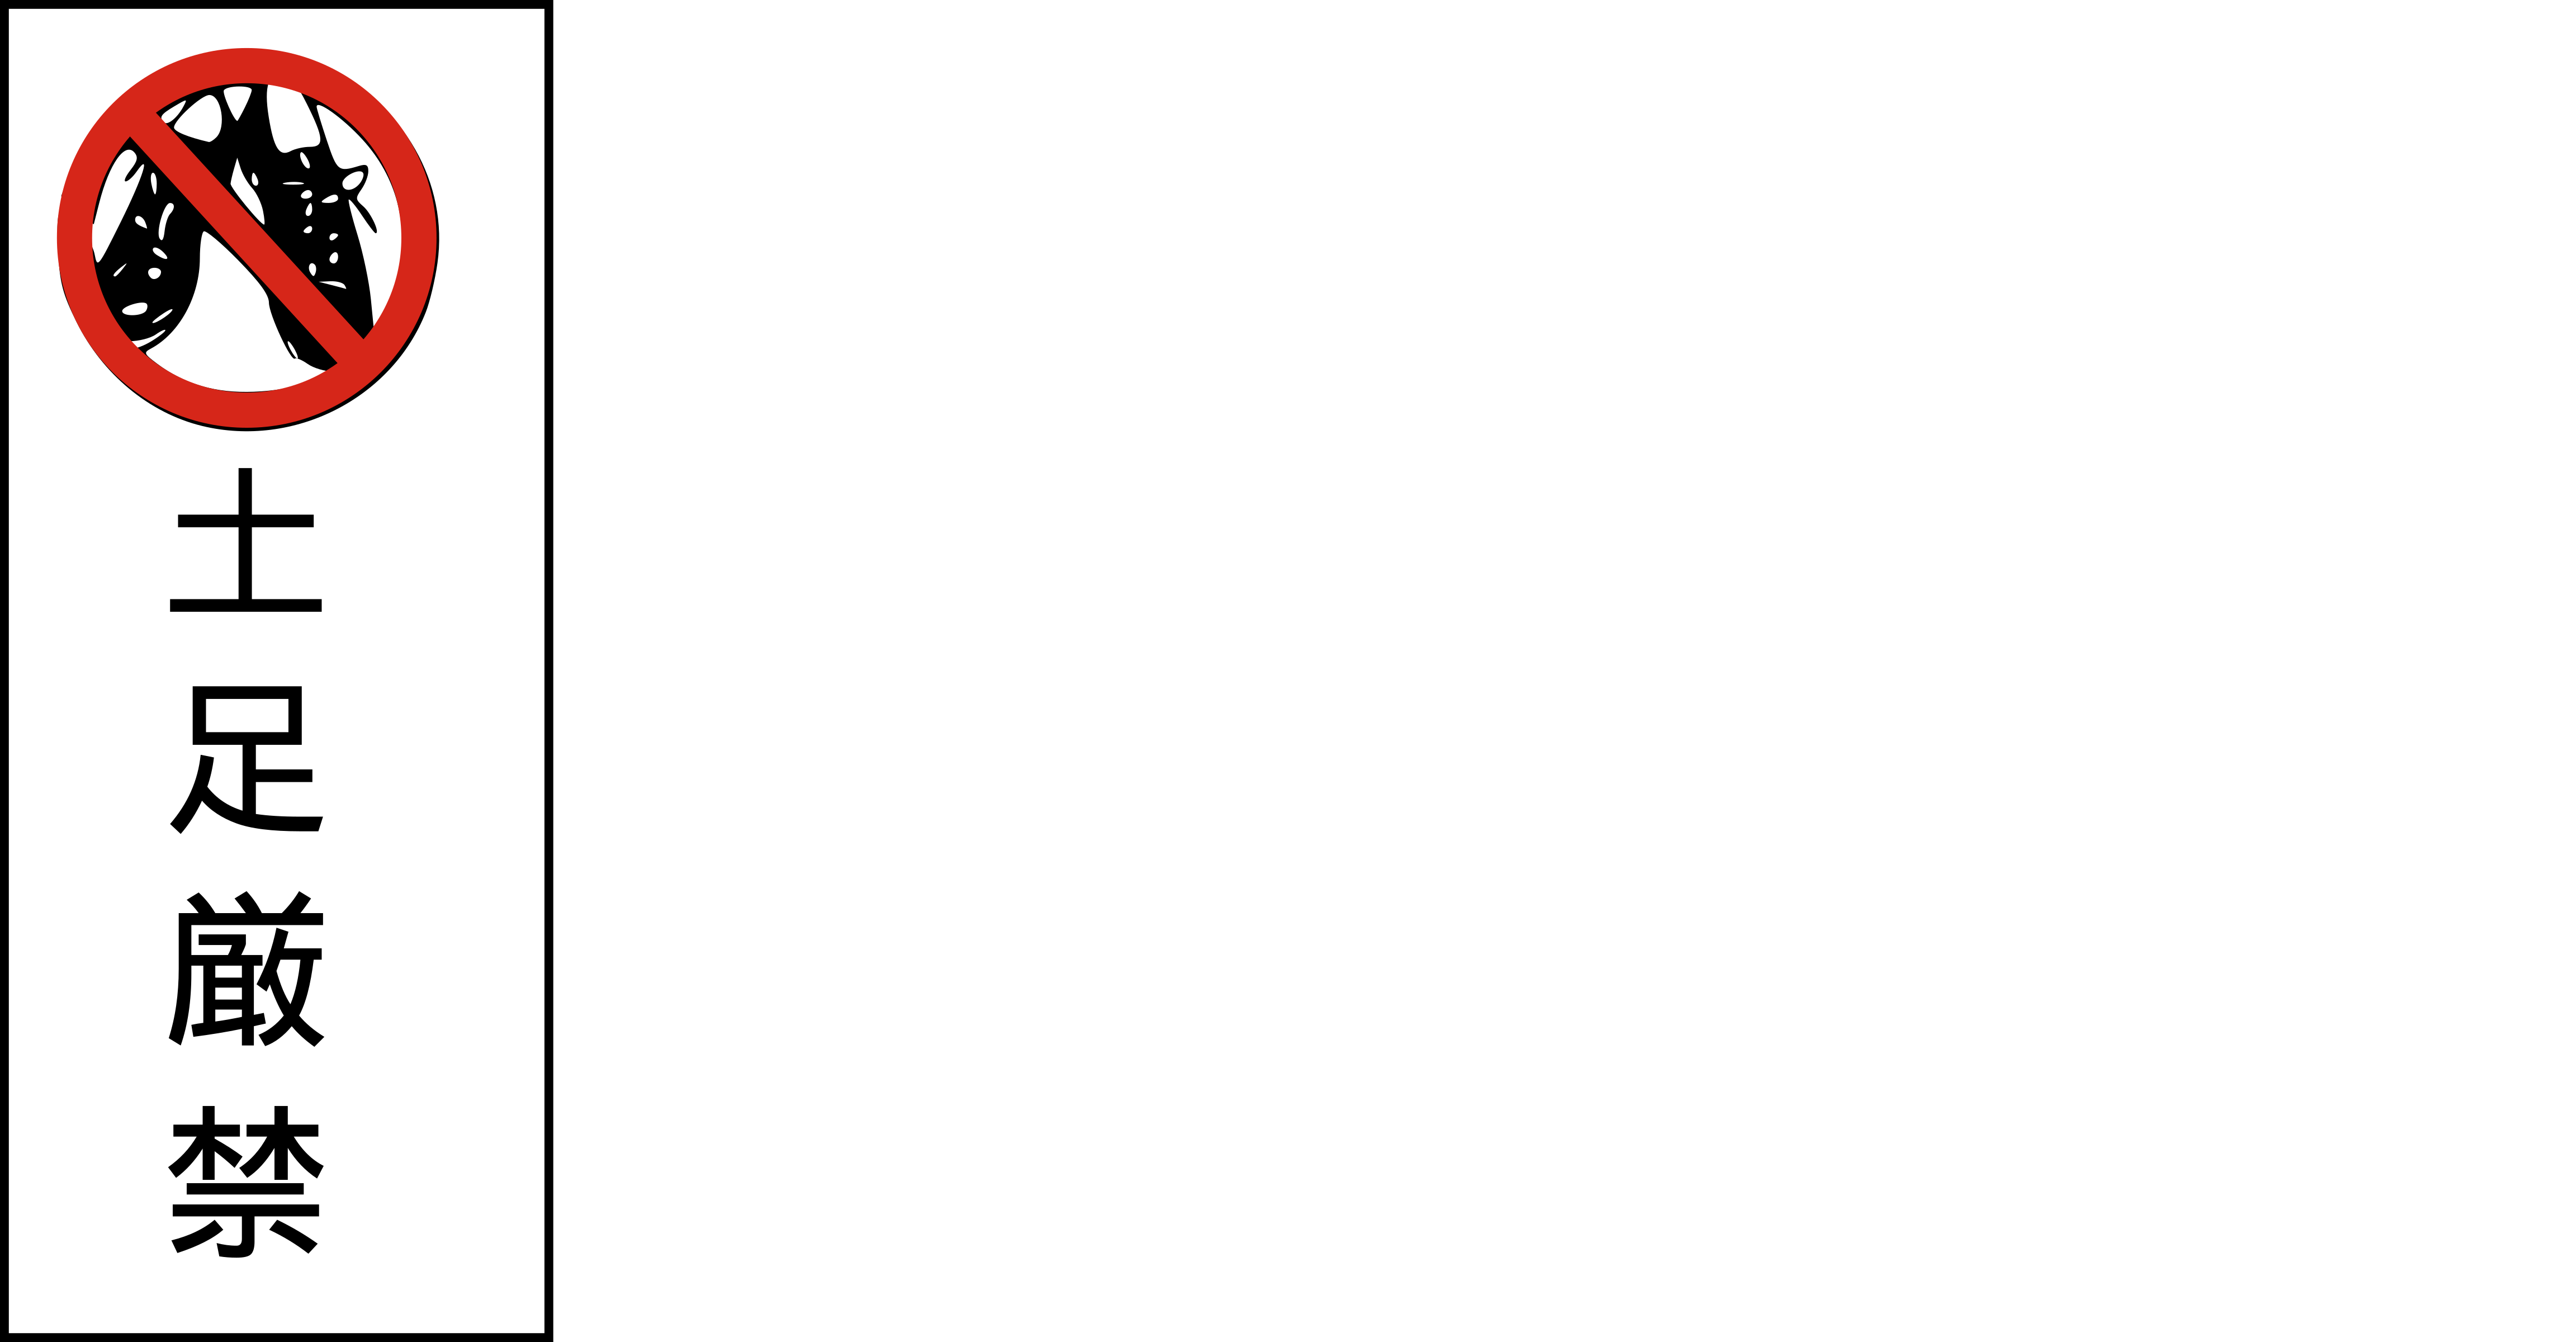 japanese clipart logo